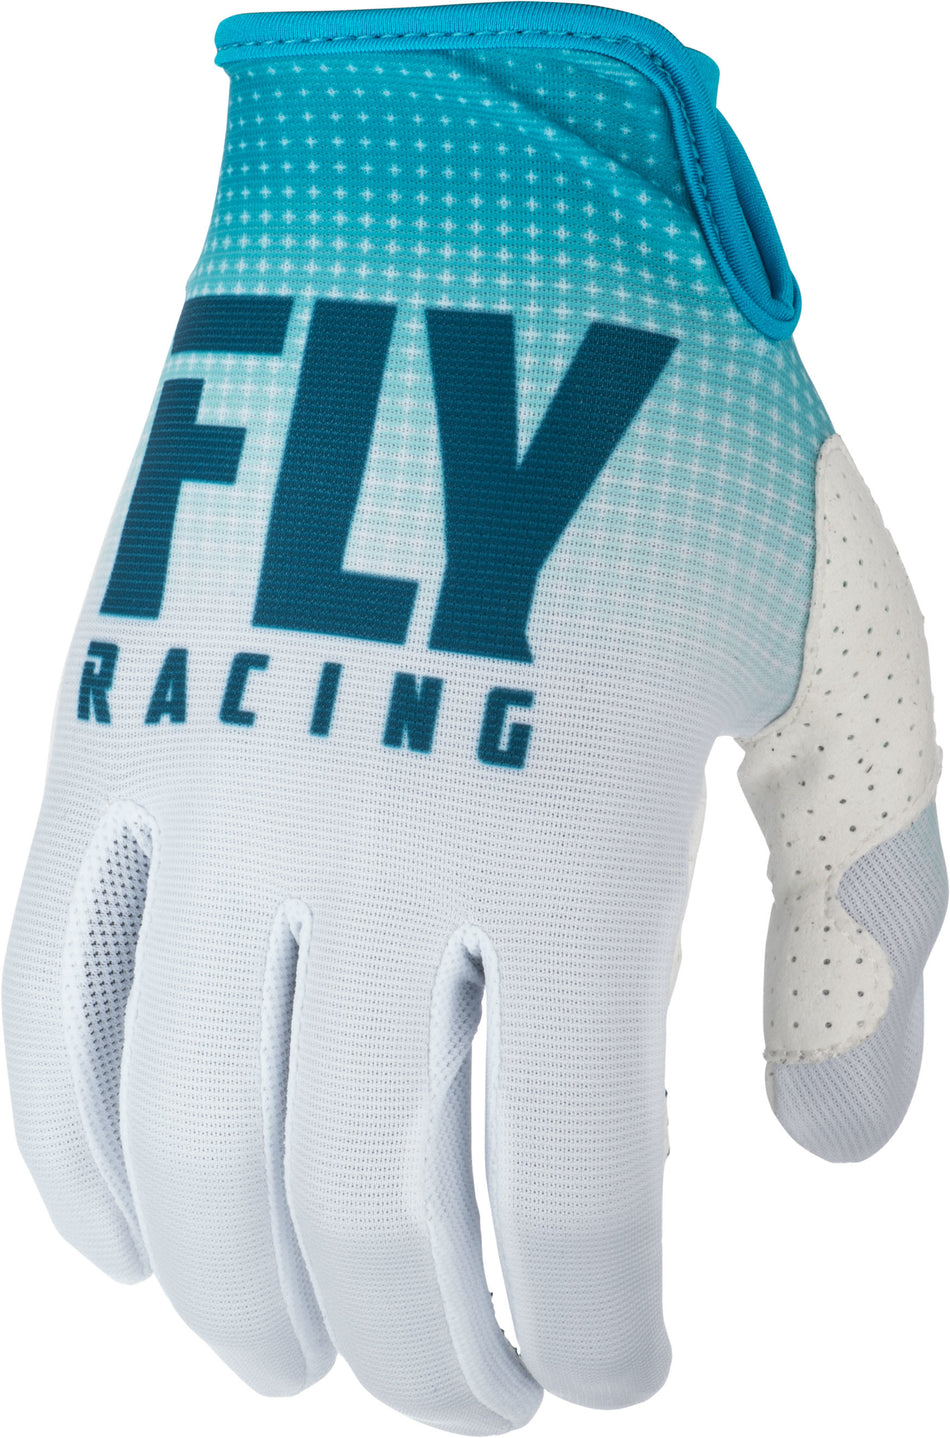 FLY RACING Lite Gloves Blue/White Sz 04 372-01104